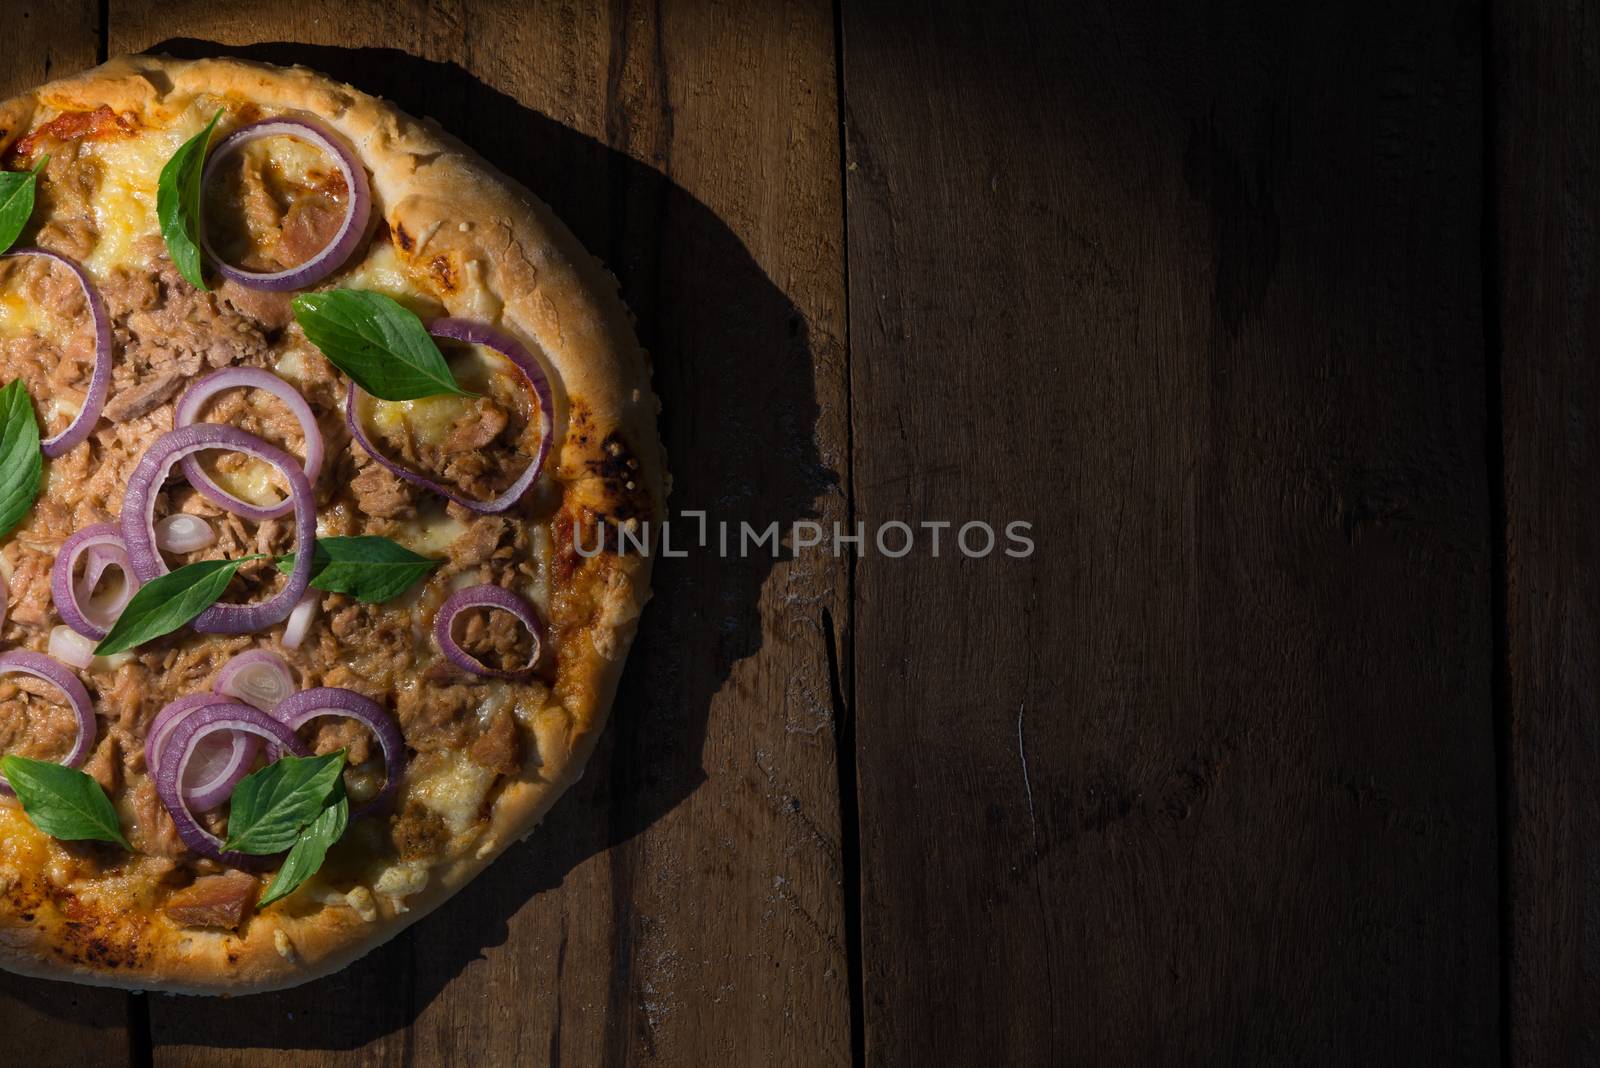 Tuna pizza by p.studio66